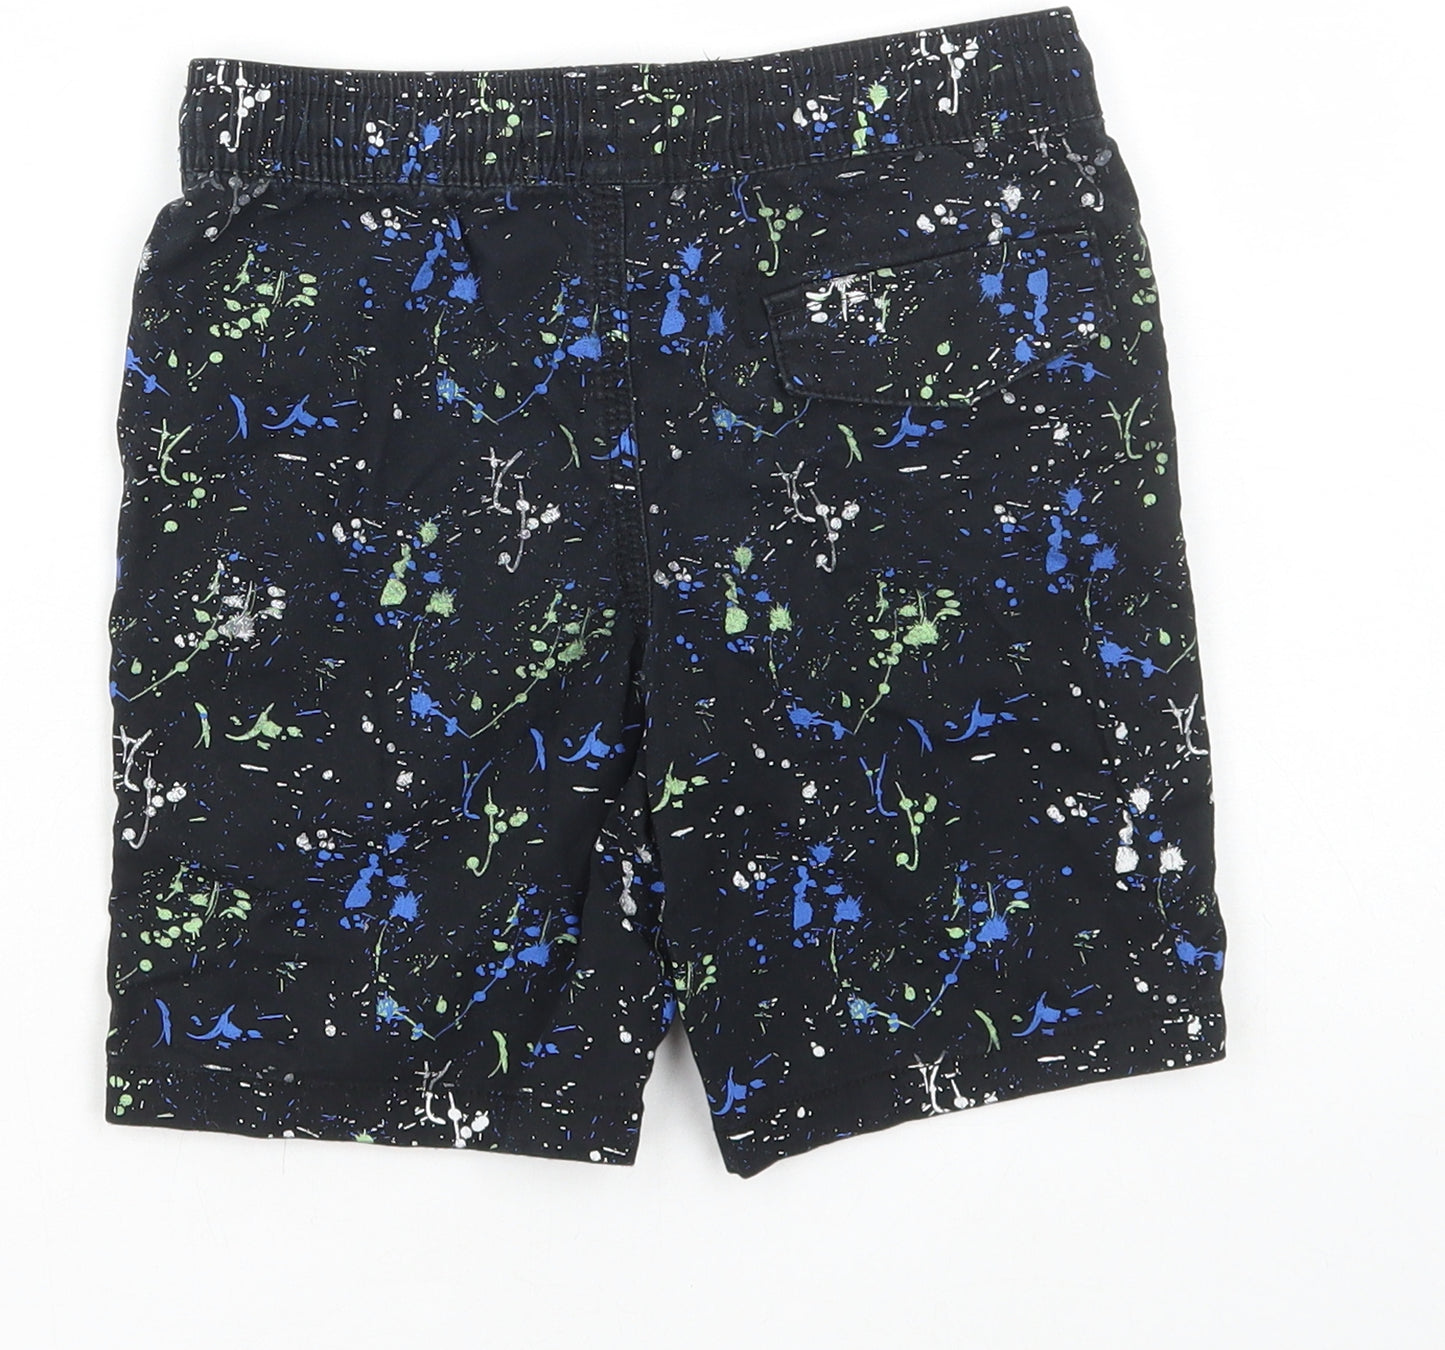 Primark Boys Multicoloured Geometric Polyester Sweat Shorts Size 6-7 Years Regular Drawstring